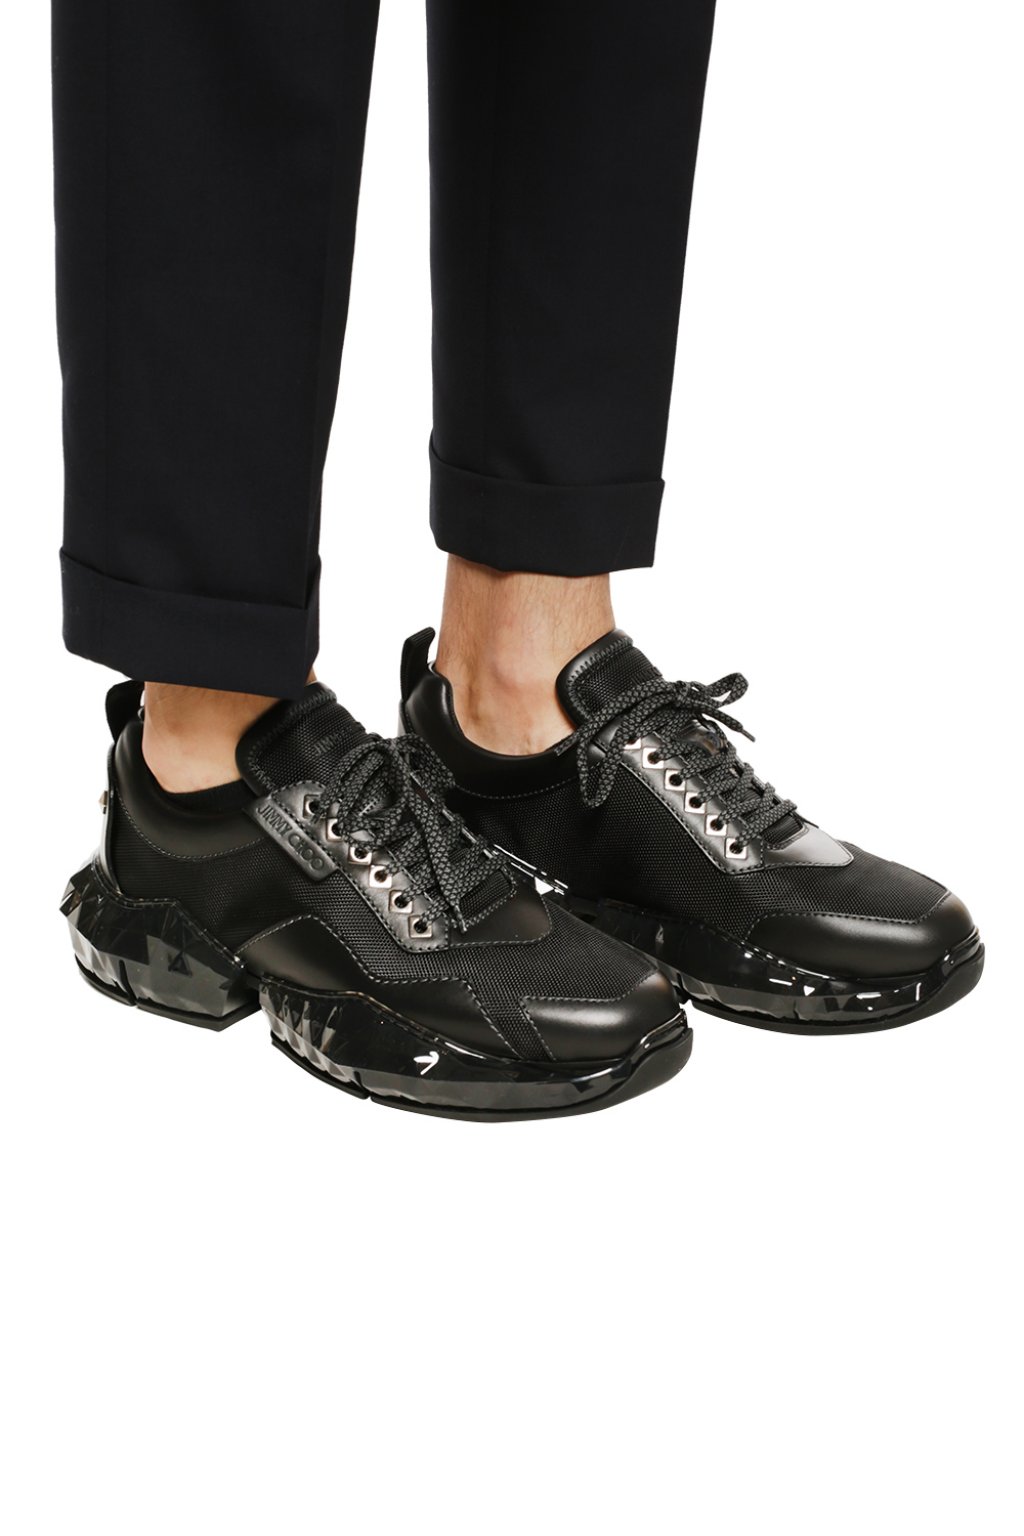 Choo 'Diamond' sneakers | Men's Shoes |